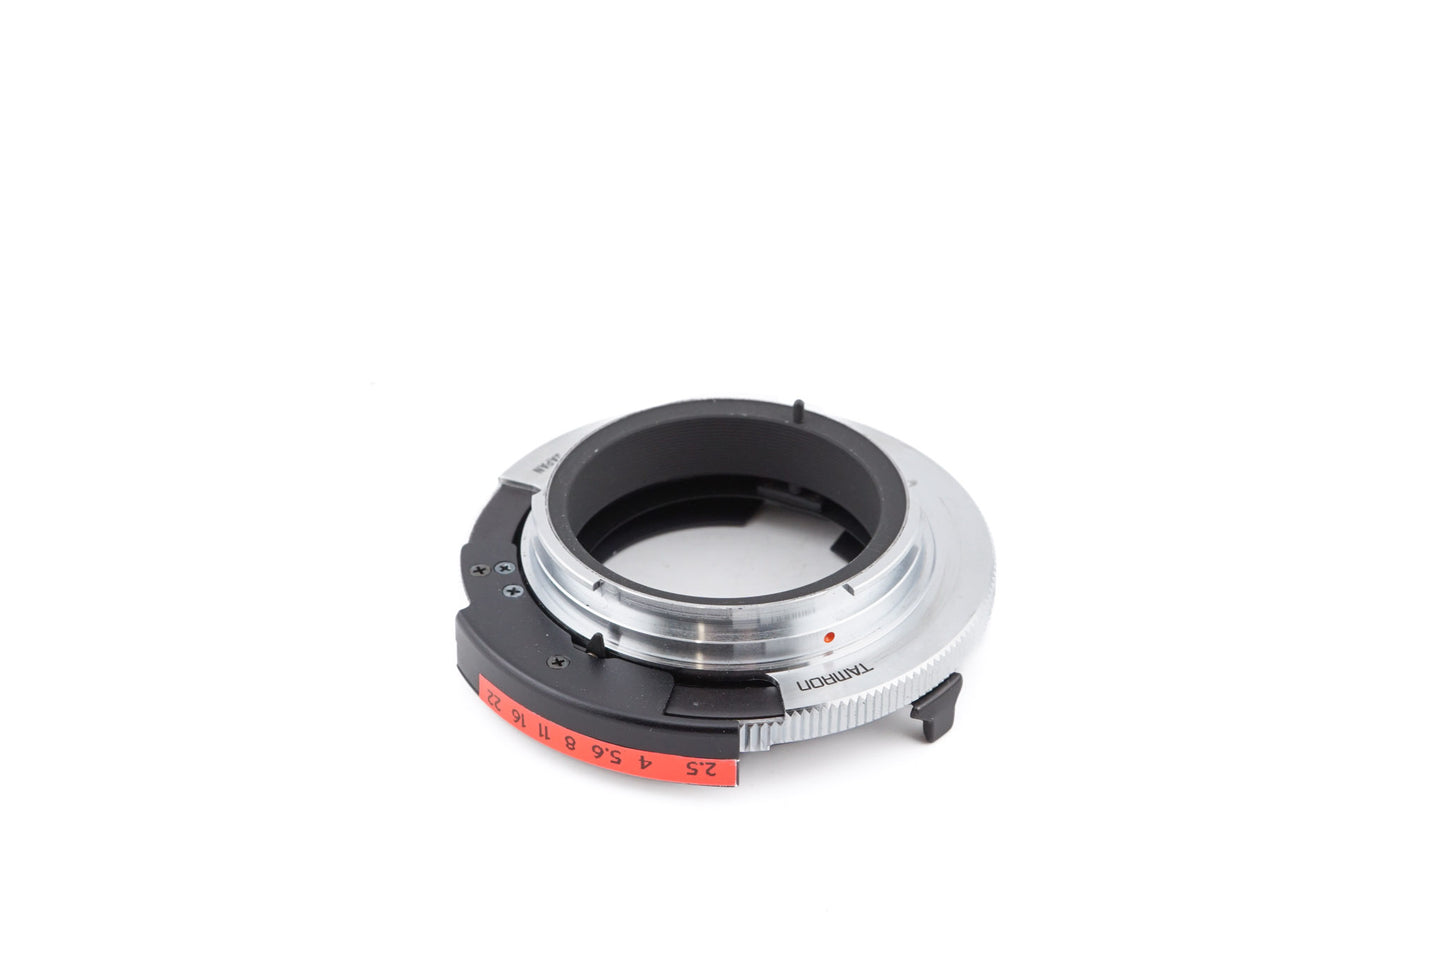 Tamron Adaptall 2 - Rollei QBM - Lens Adapter